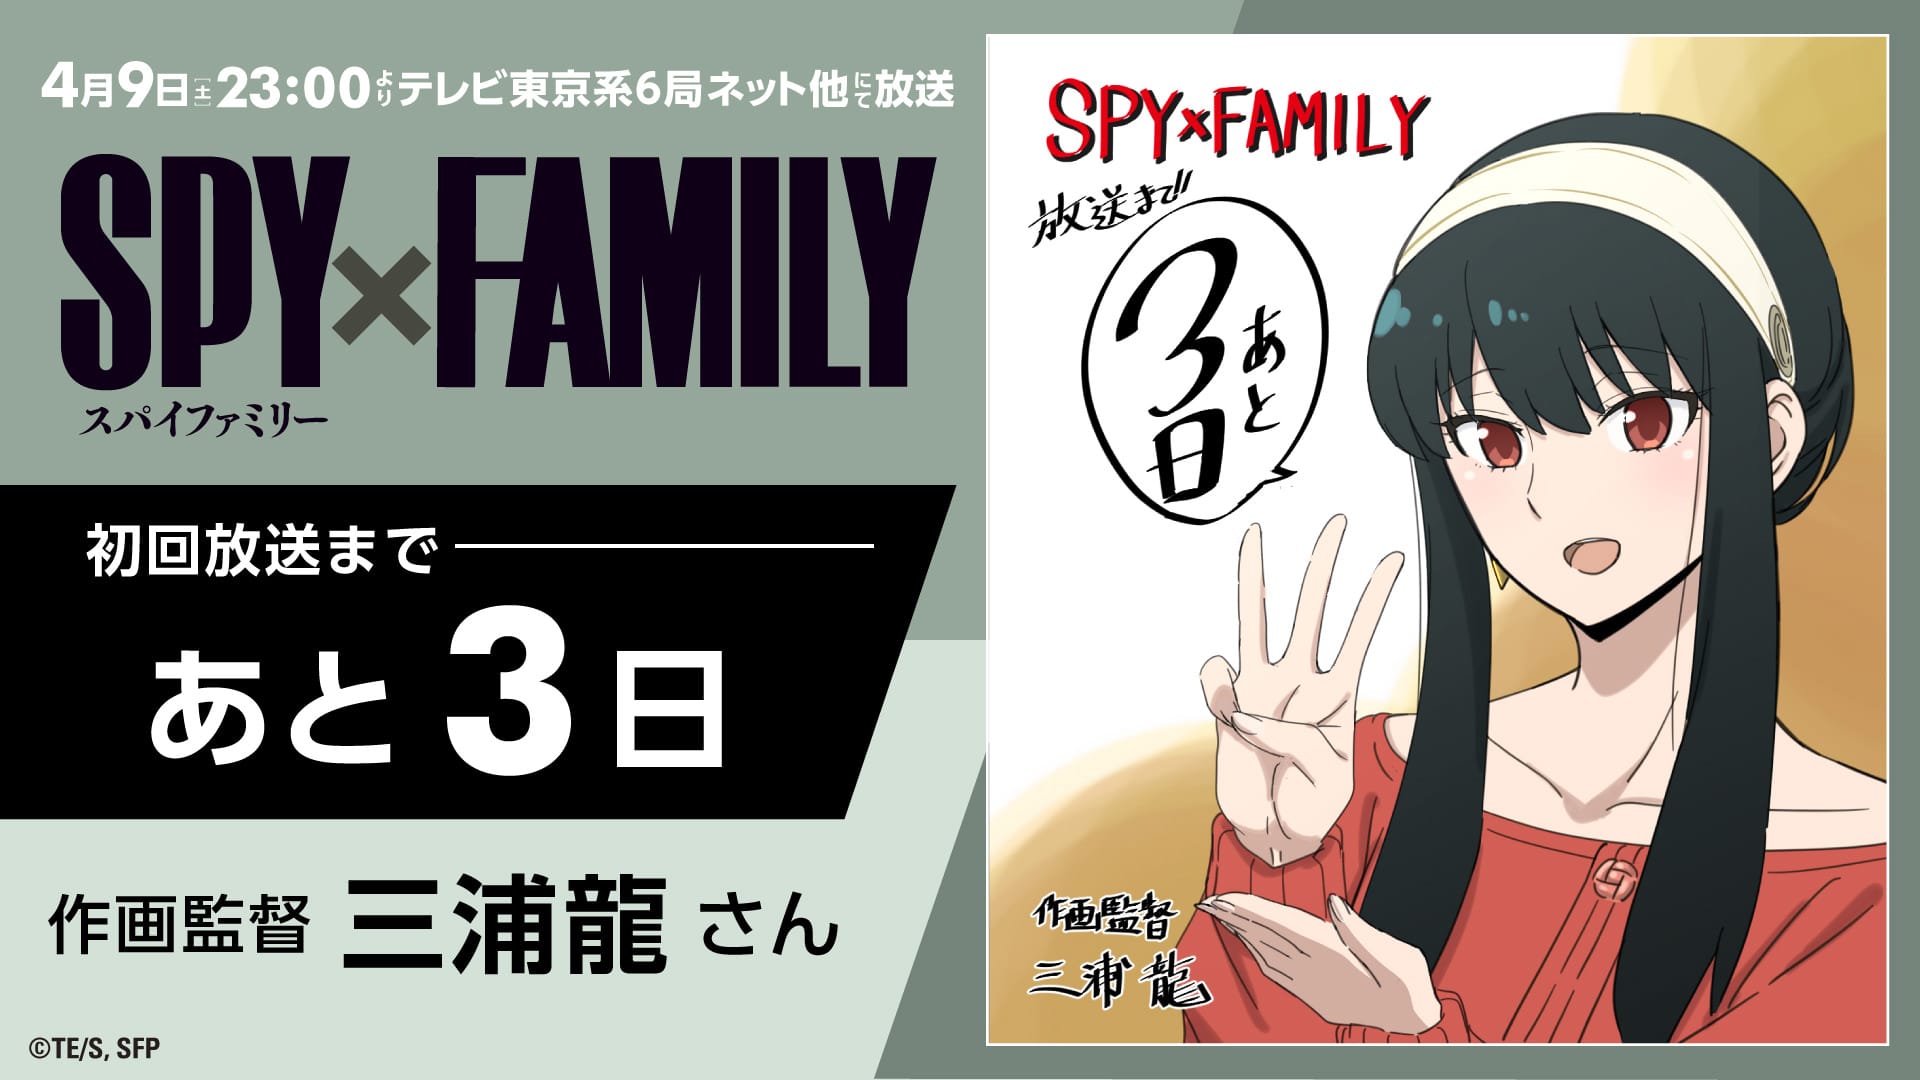 SPY×FAMILY アニメ放送カウントダウン第6弾「ヨル」の描き下ろし登場!